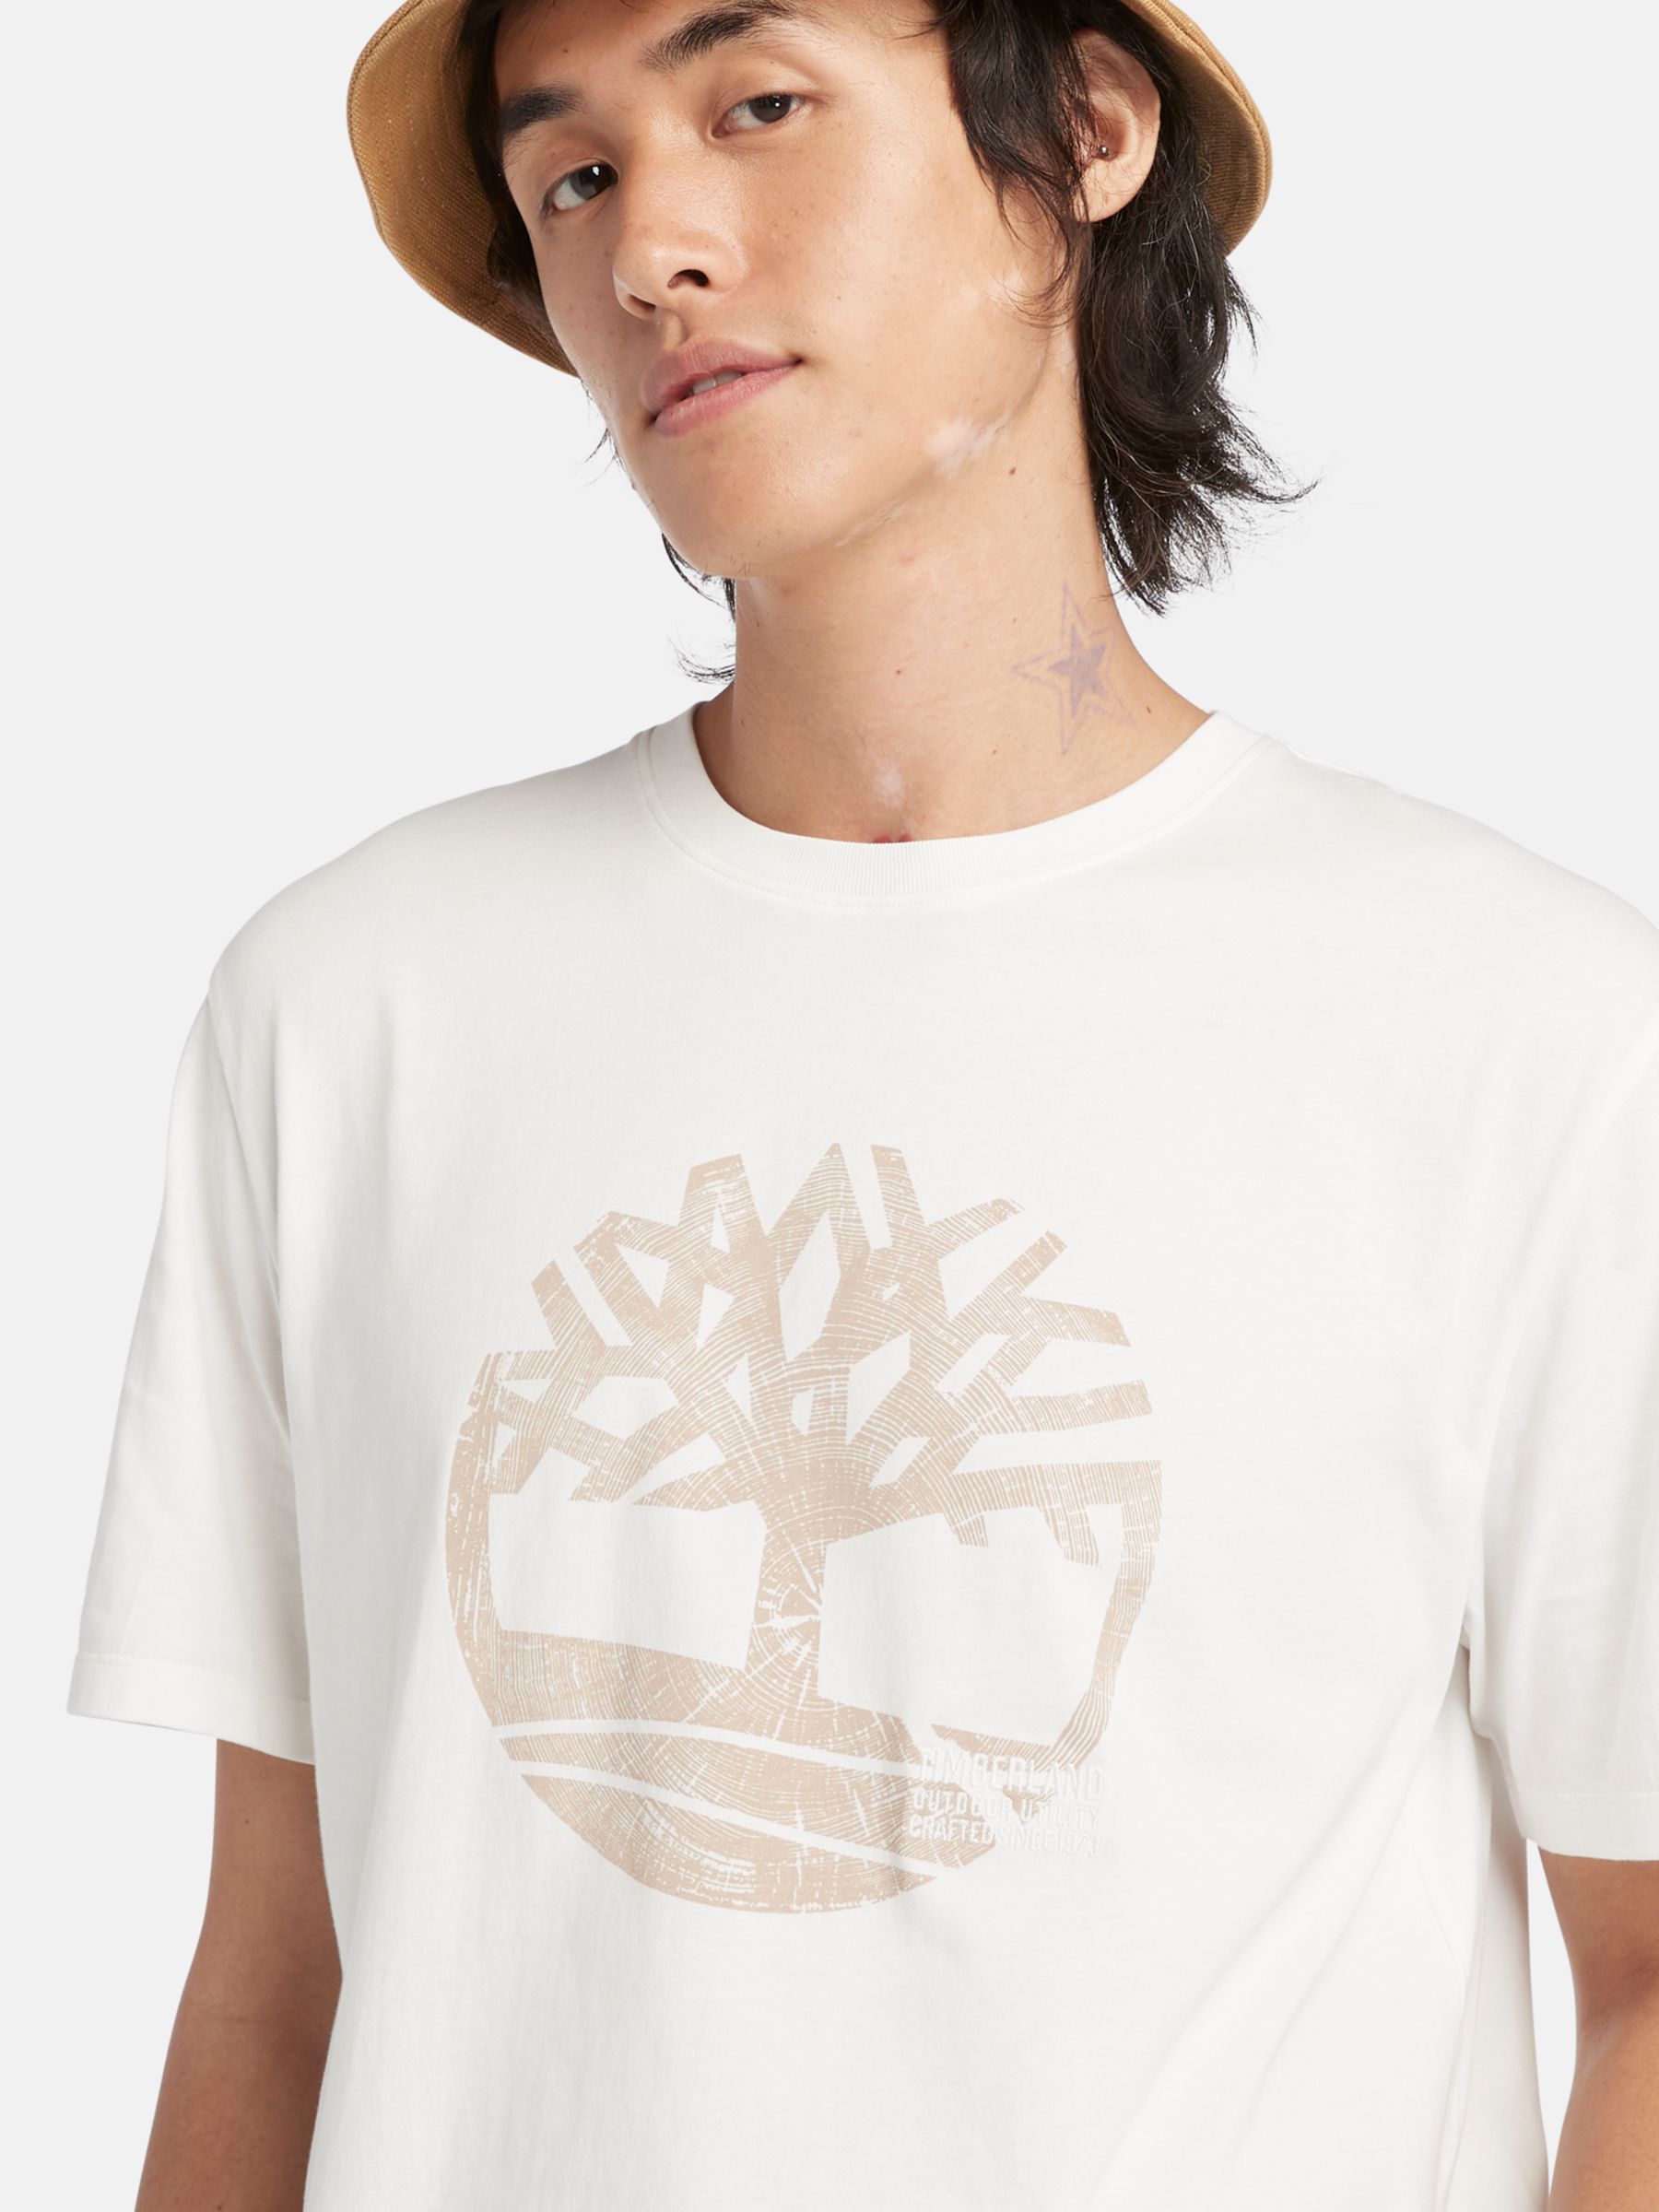 Timberland Dye Logo Organic Cotton T-Shirt, White, S